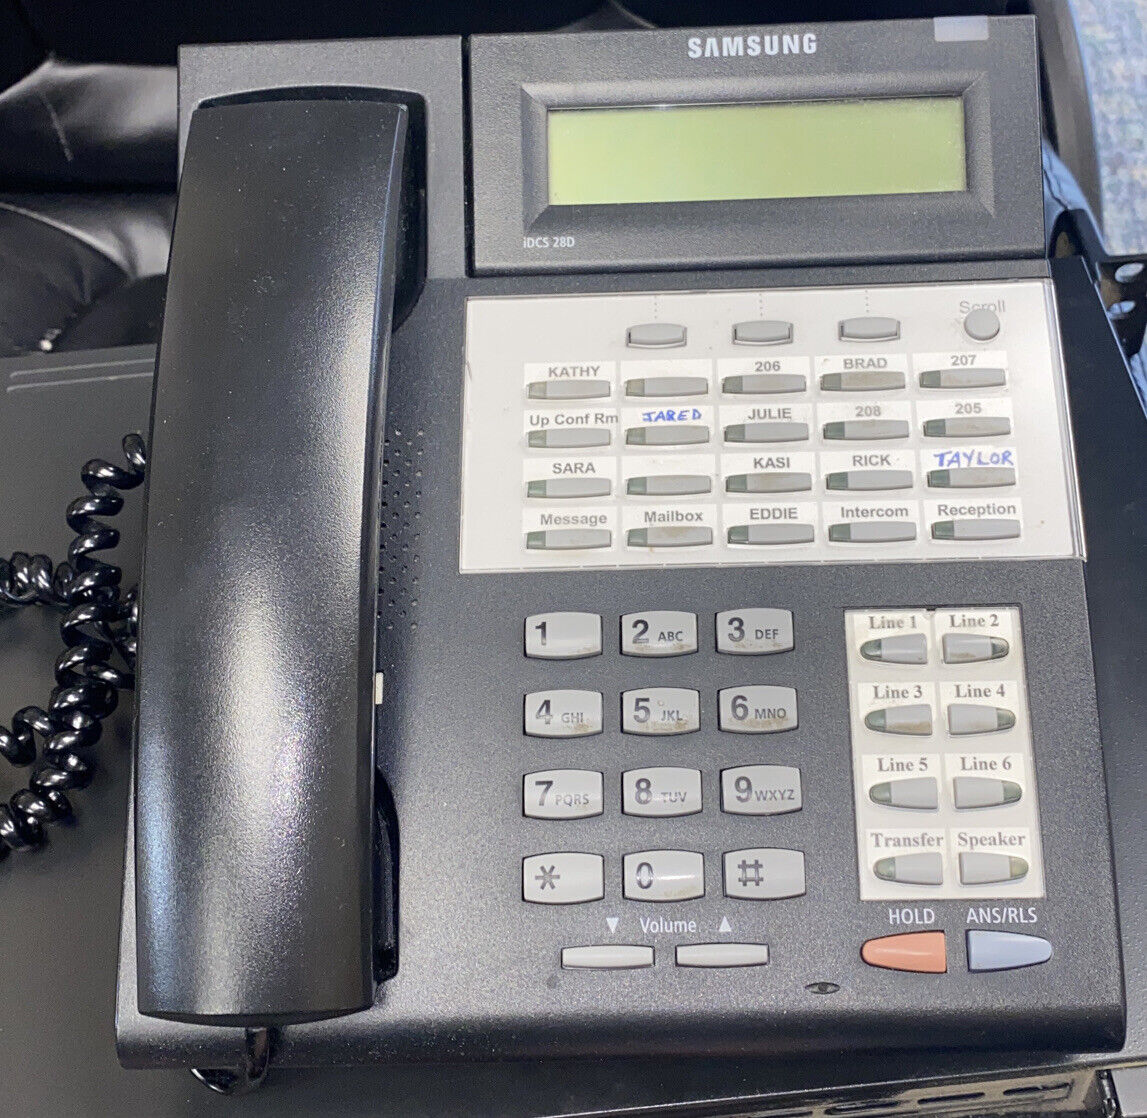 Samsung iDCS 28D Digital Telephone Black with Handset Desk Phone Working